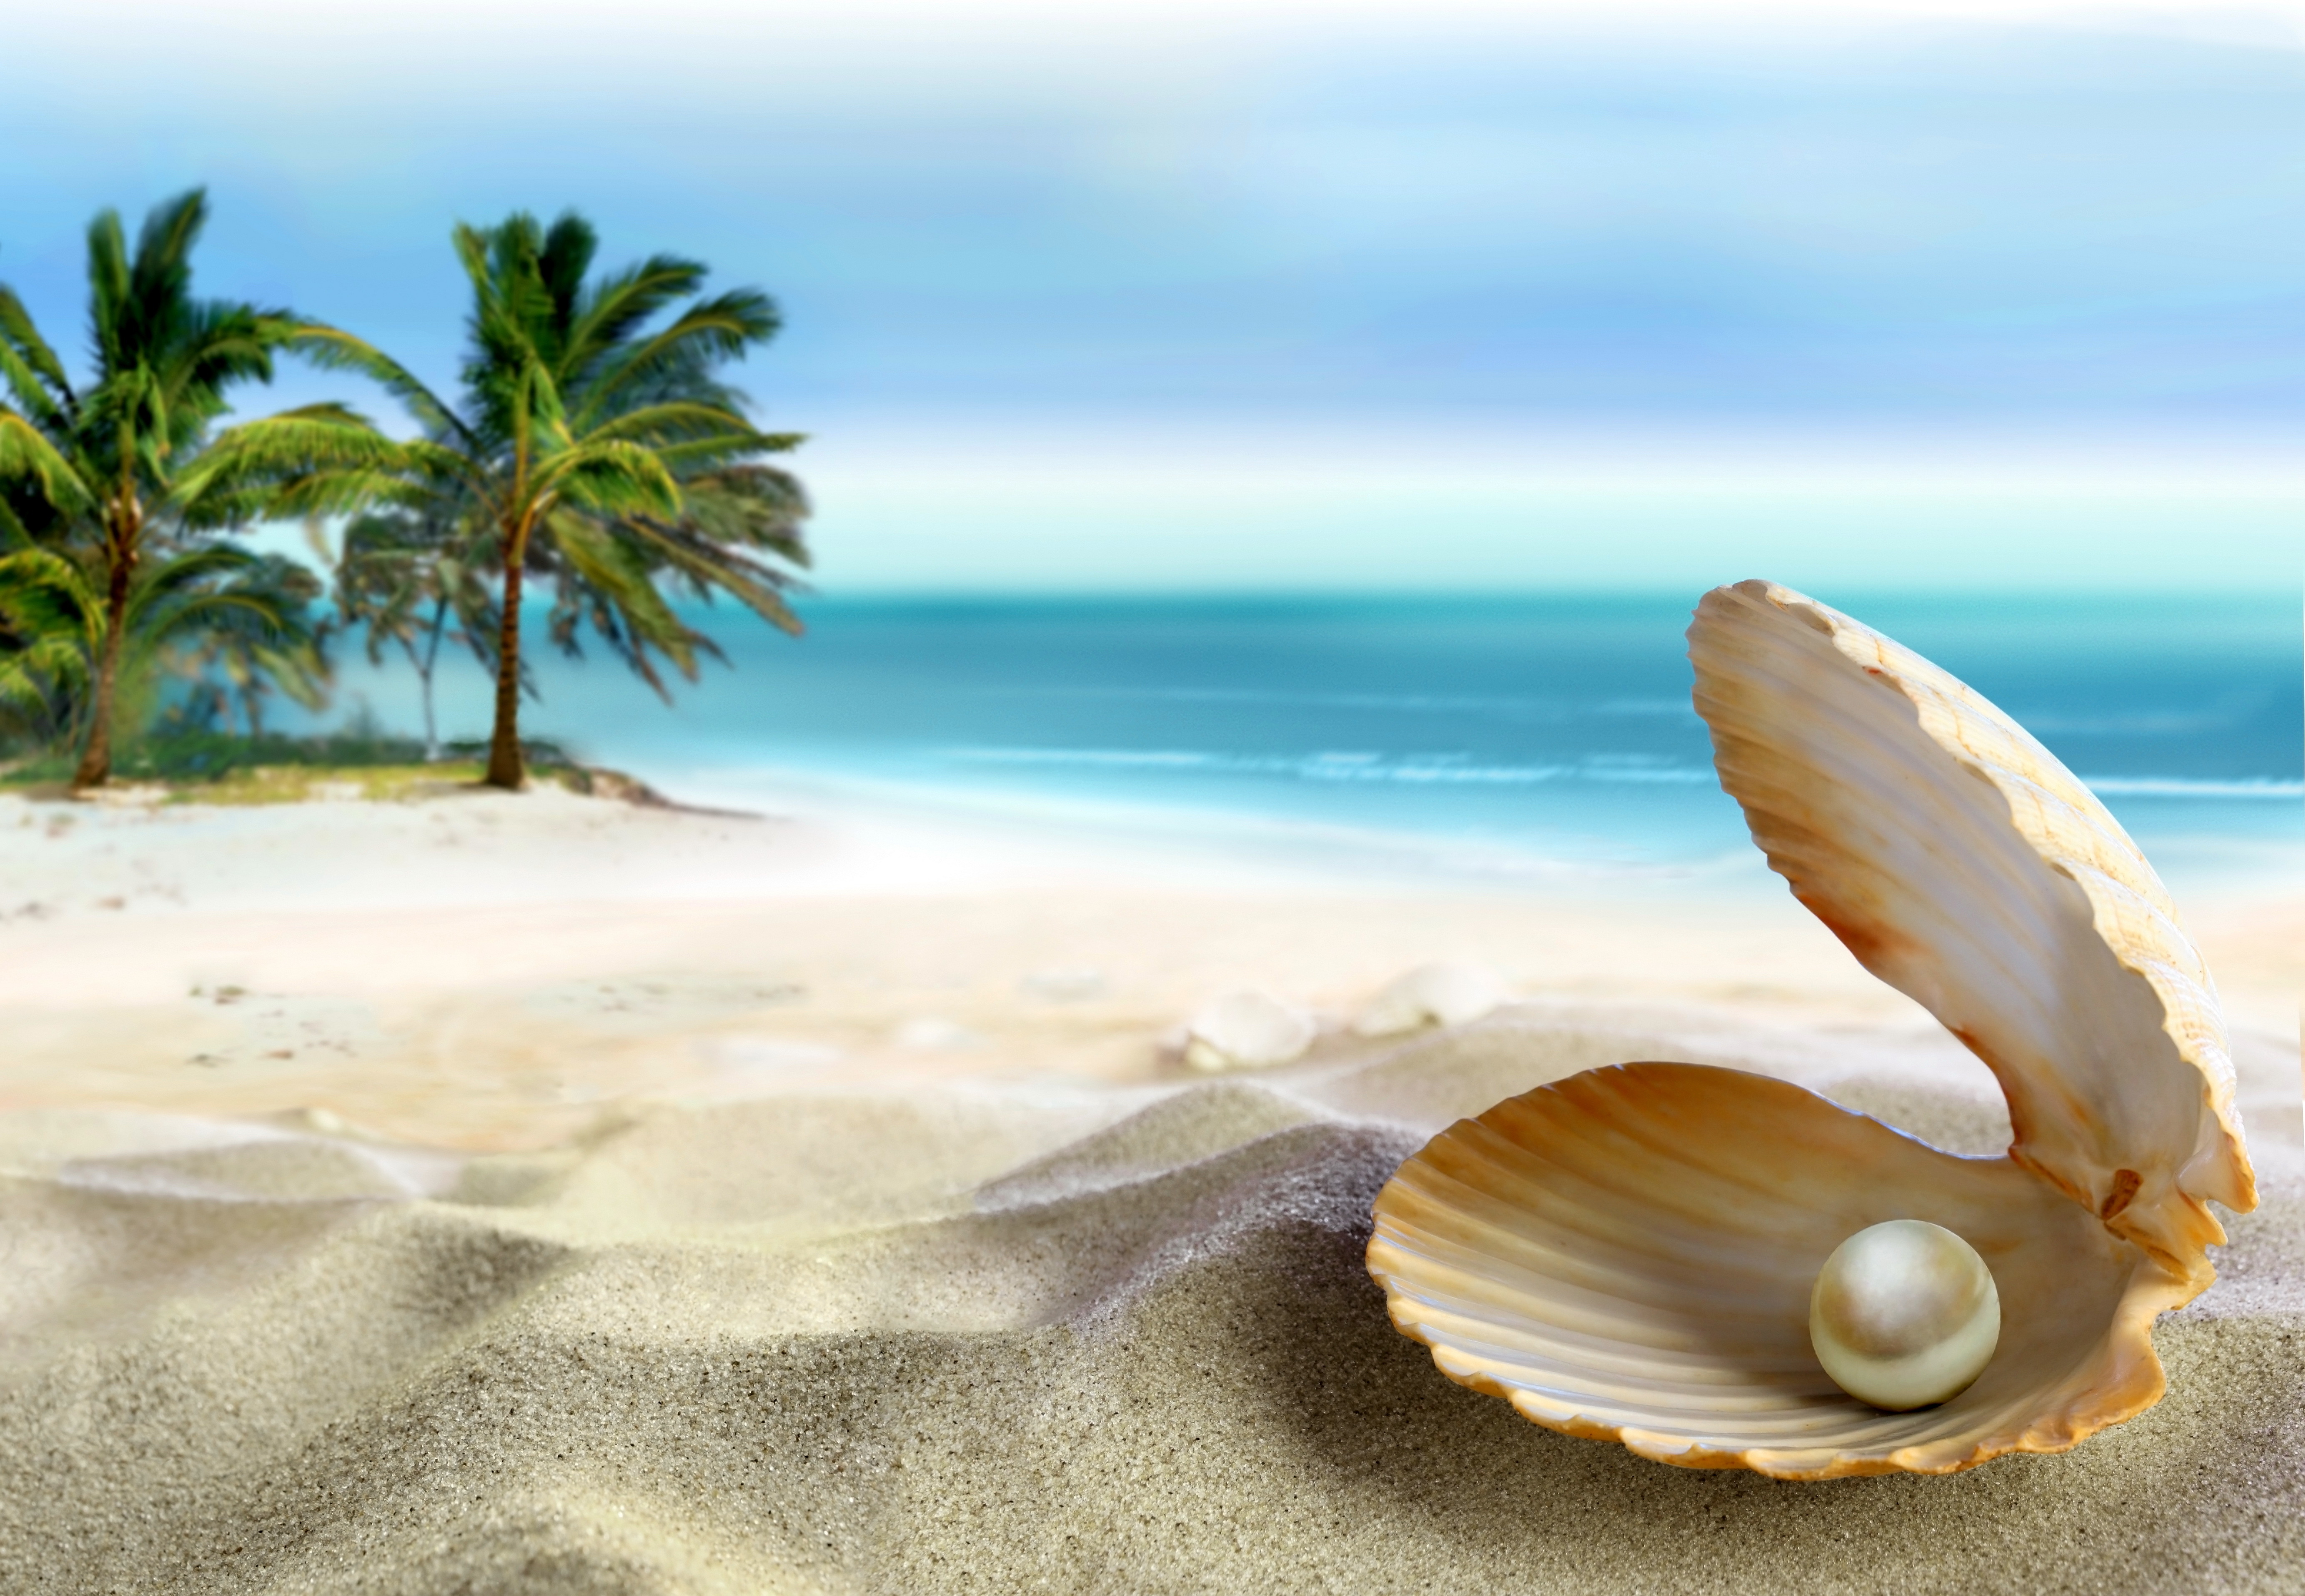 Seashell Tropical Paradise Beach Coast Sea Blue Emerald Ocean